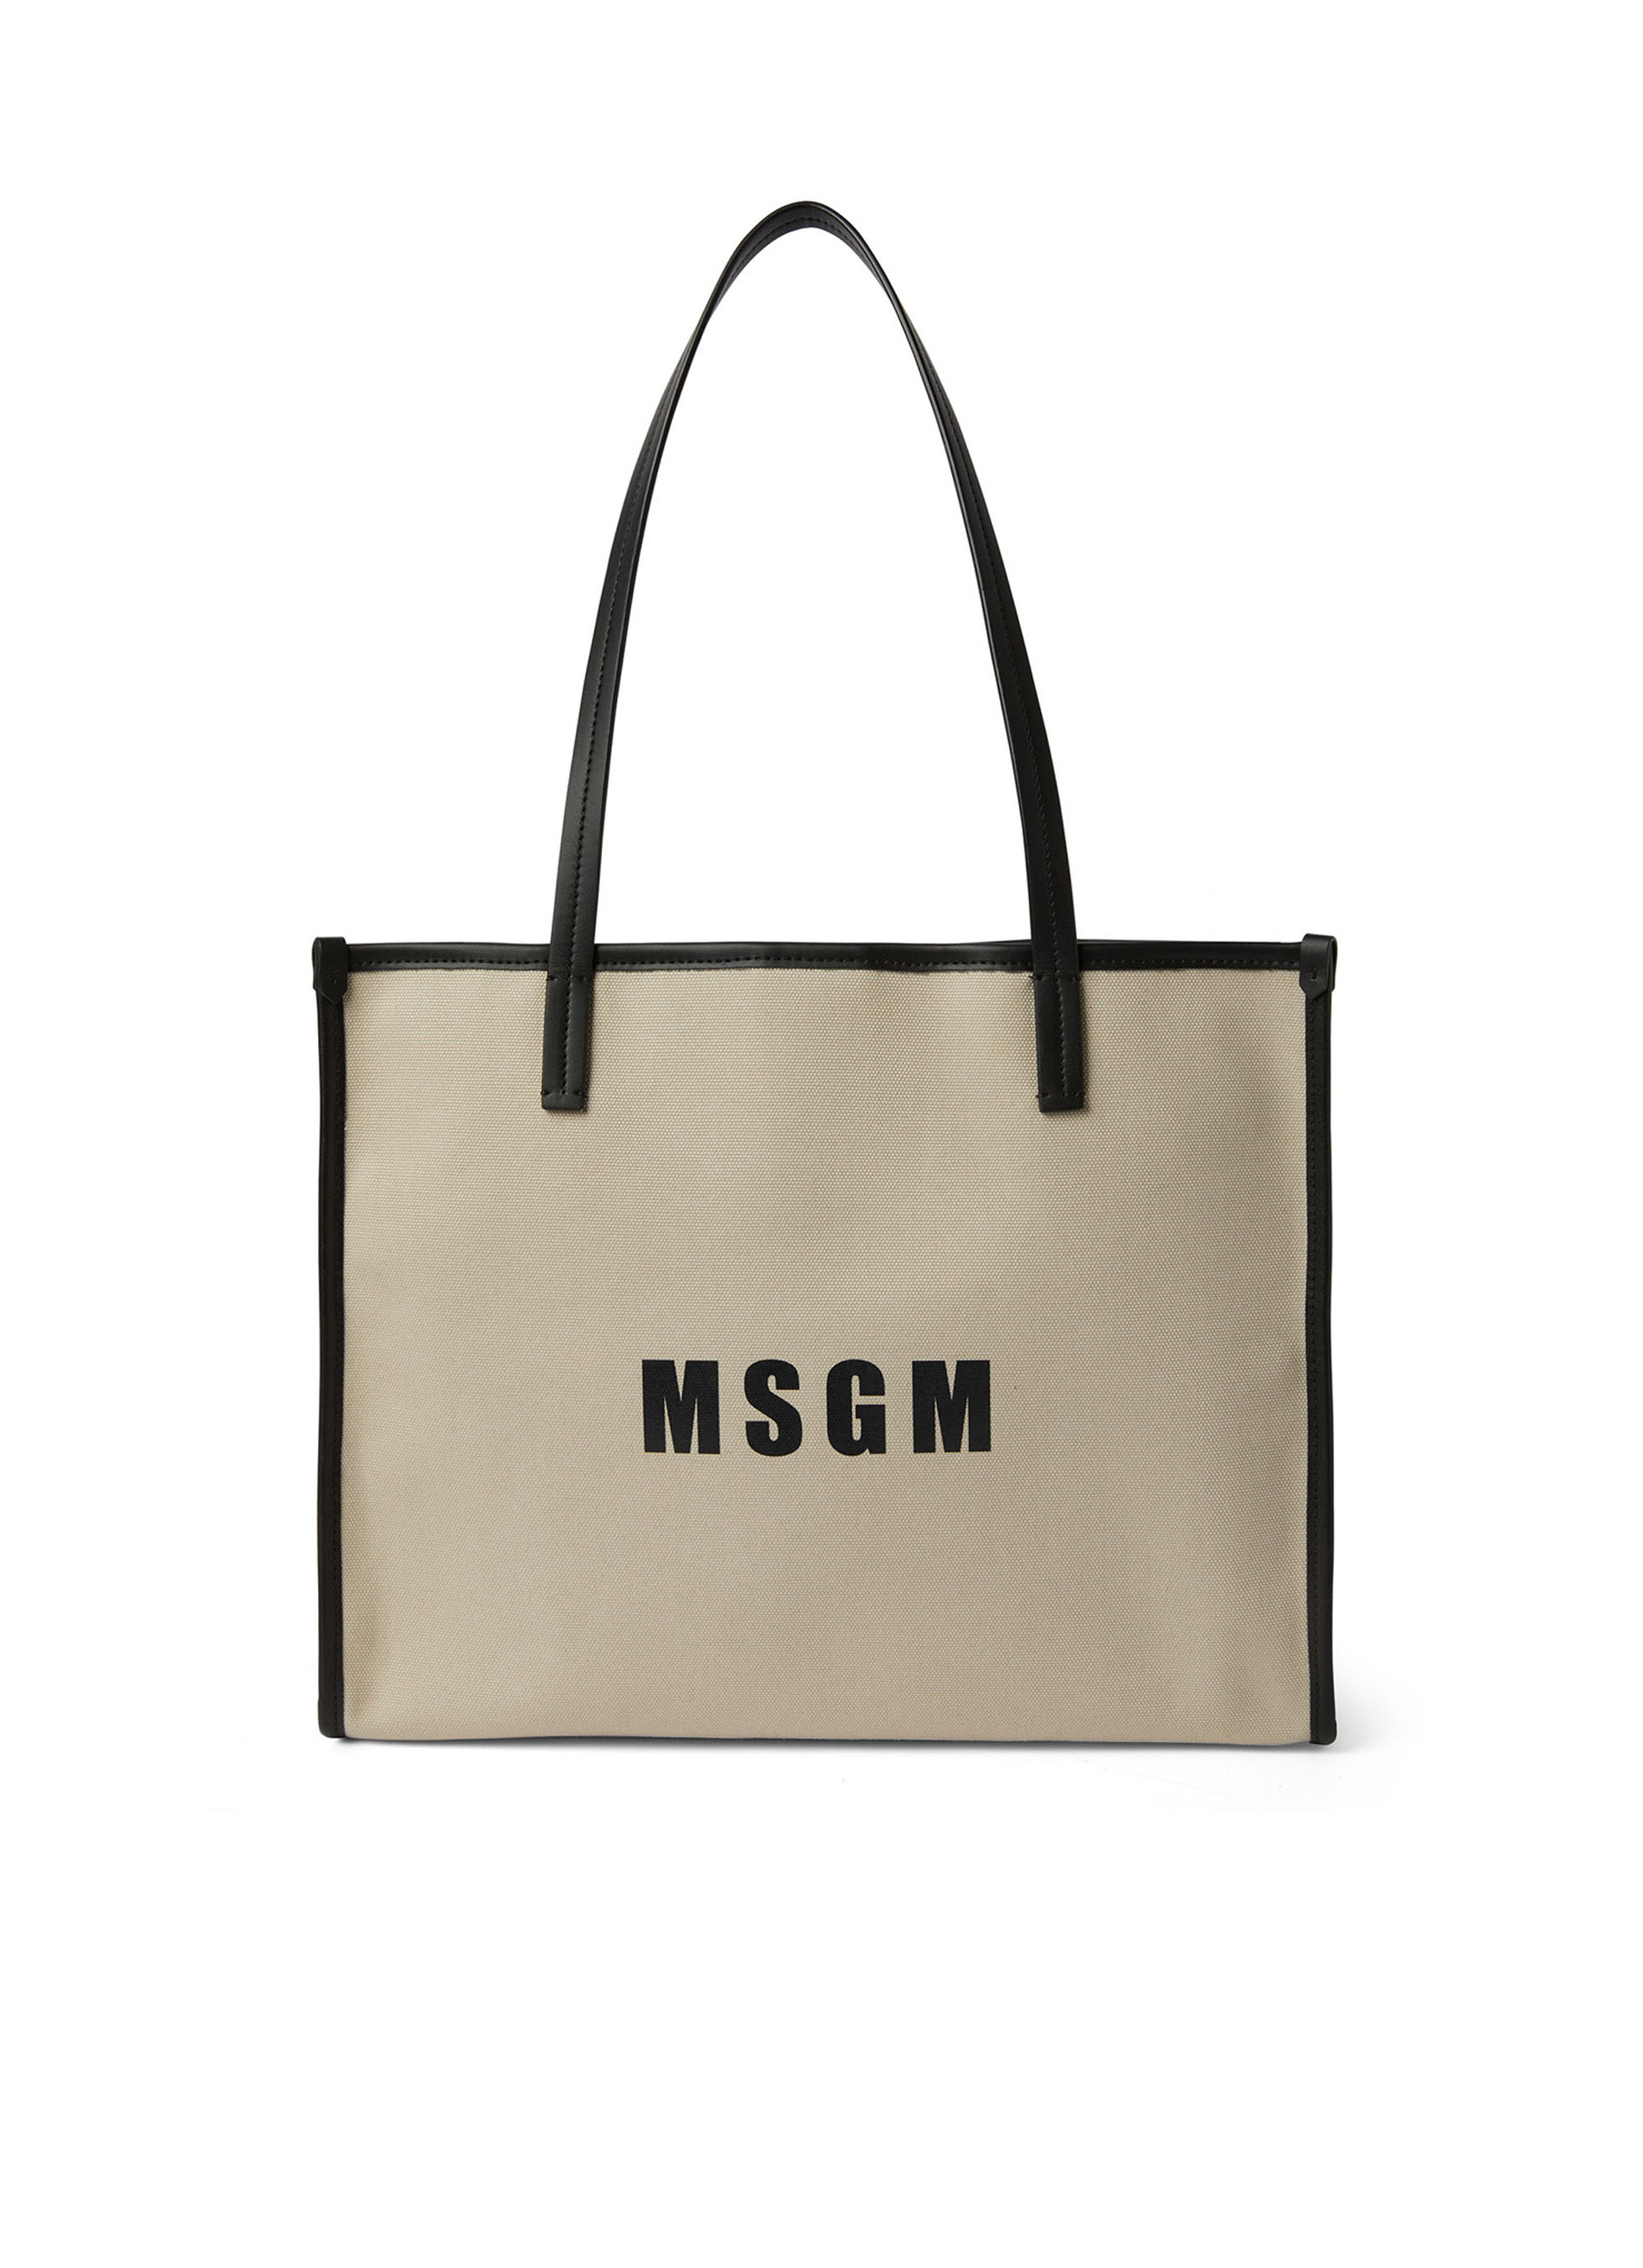 MSGM キャンバストートバッグ ホワイト 売れ筋ランキングも 38.0%割引